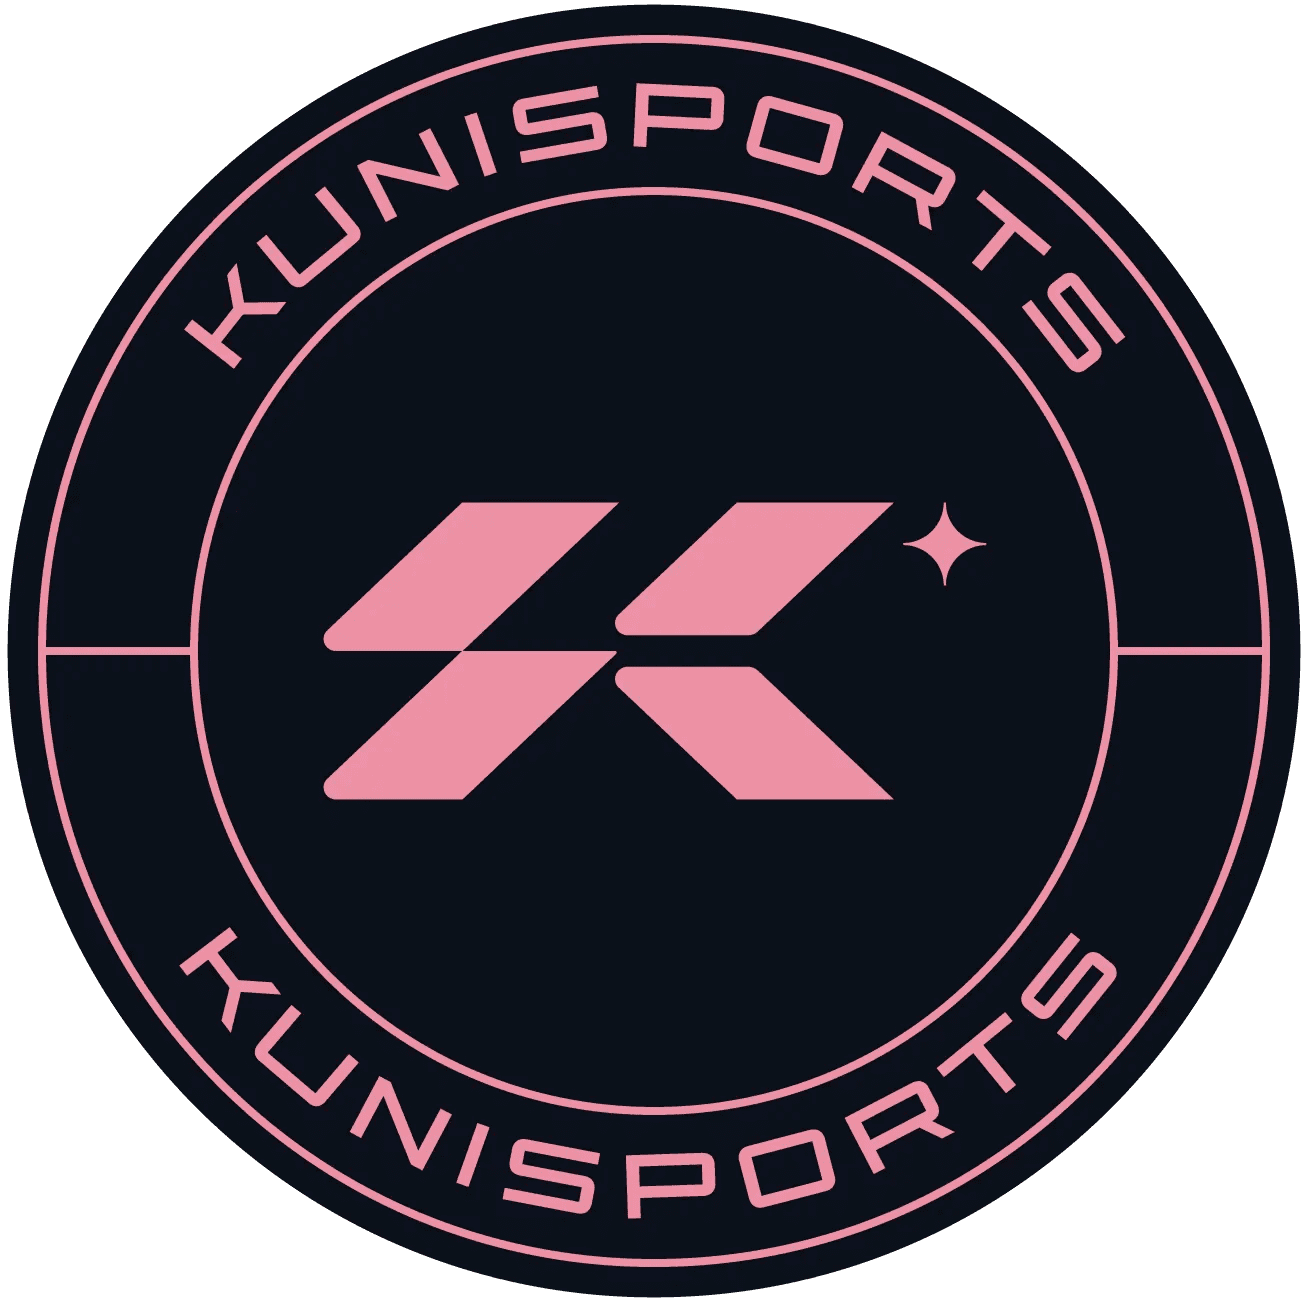 sponsors de kunisports - khosmium